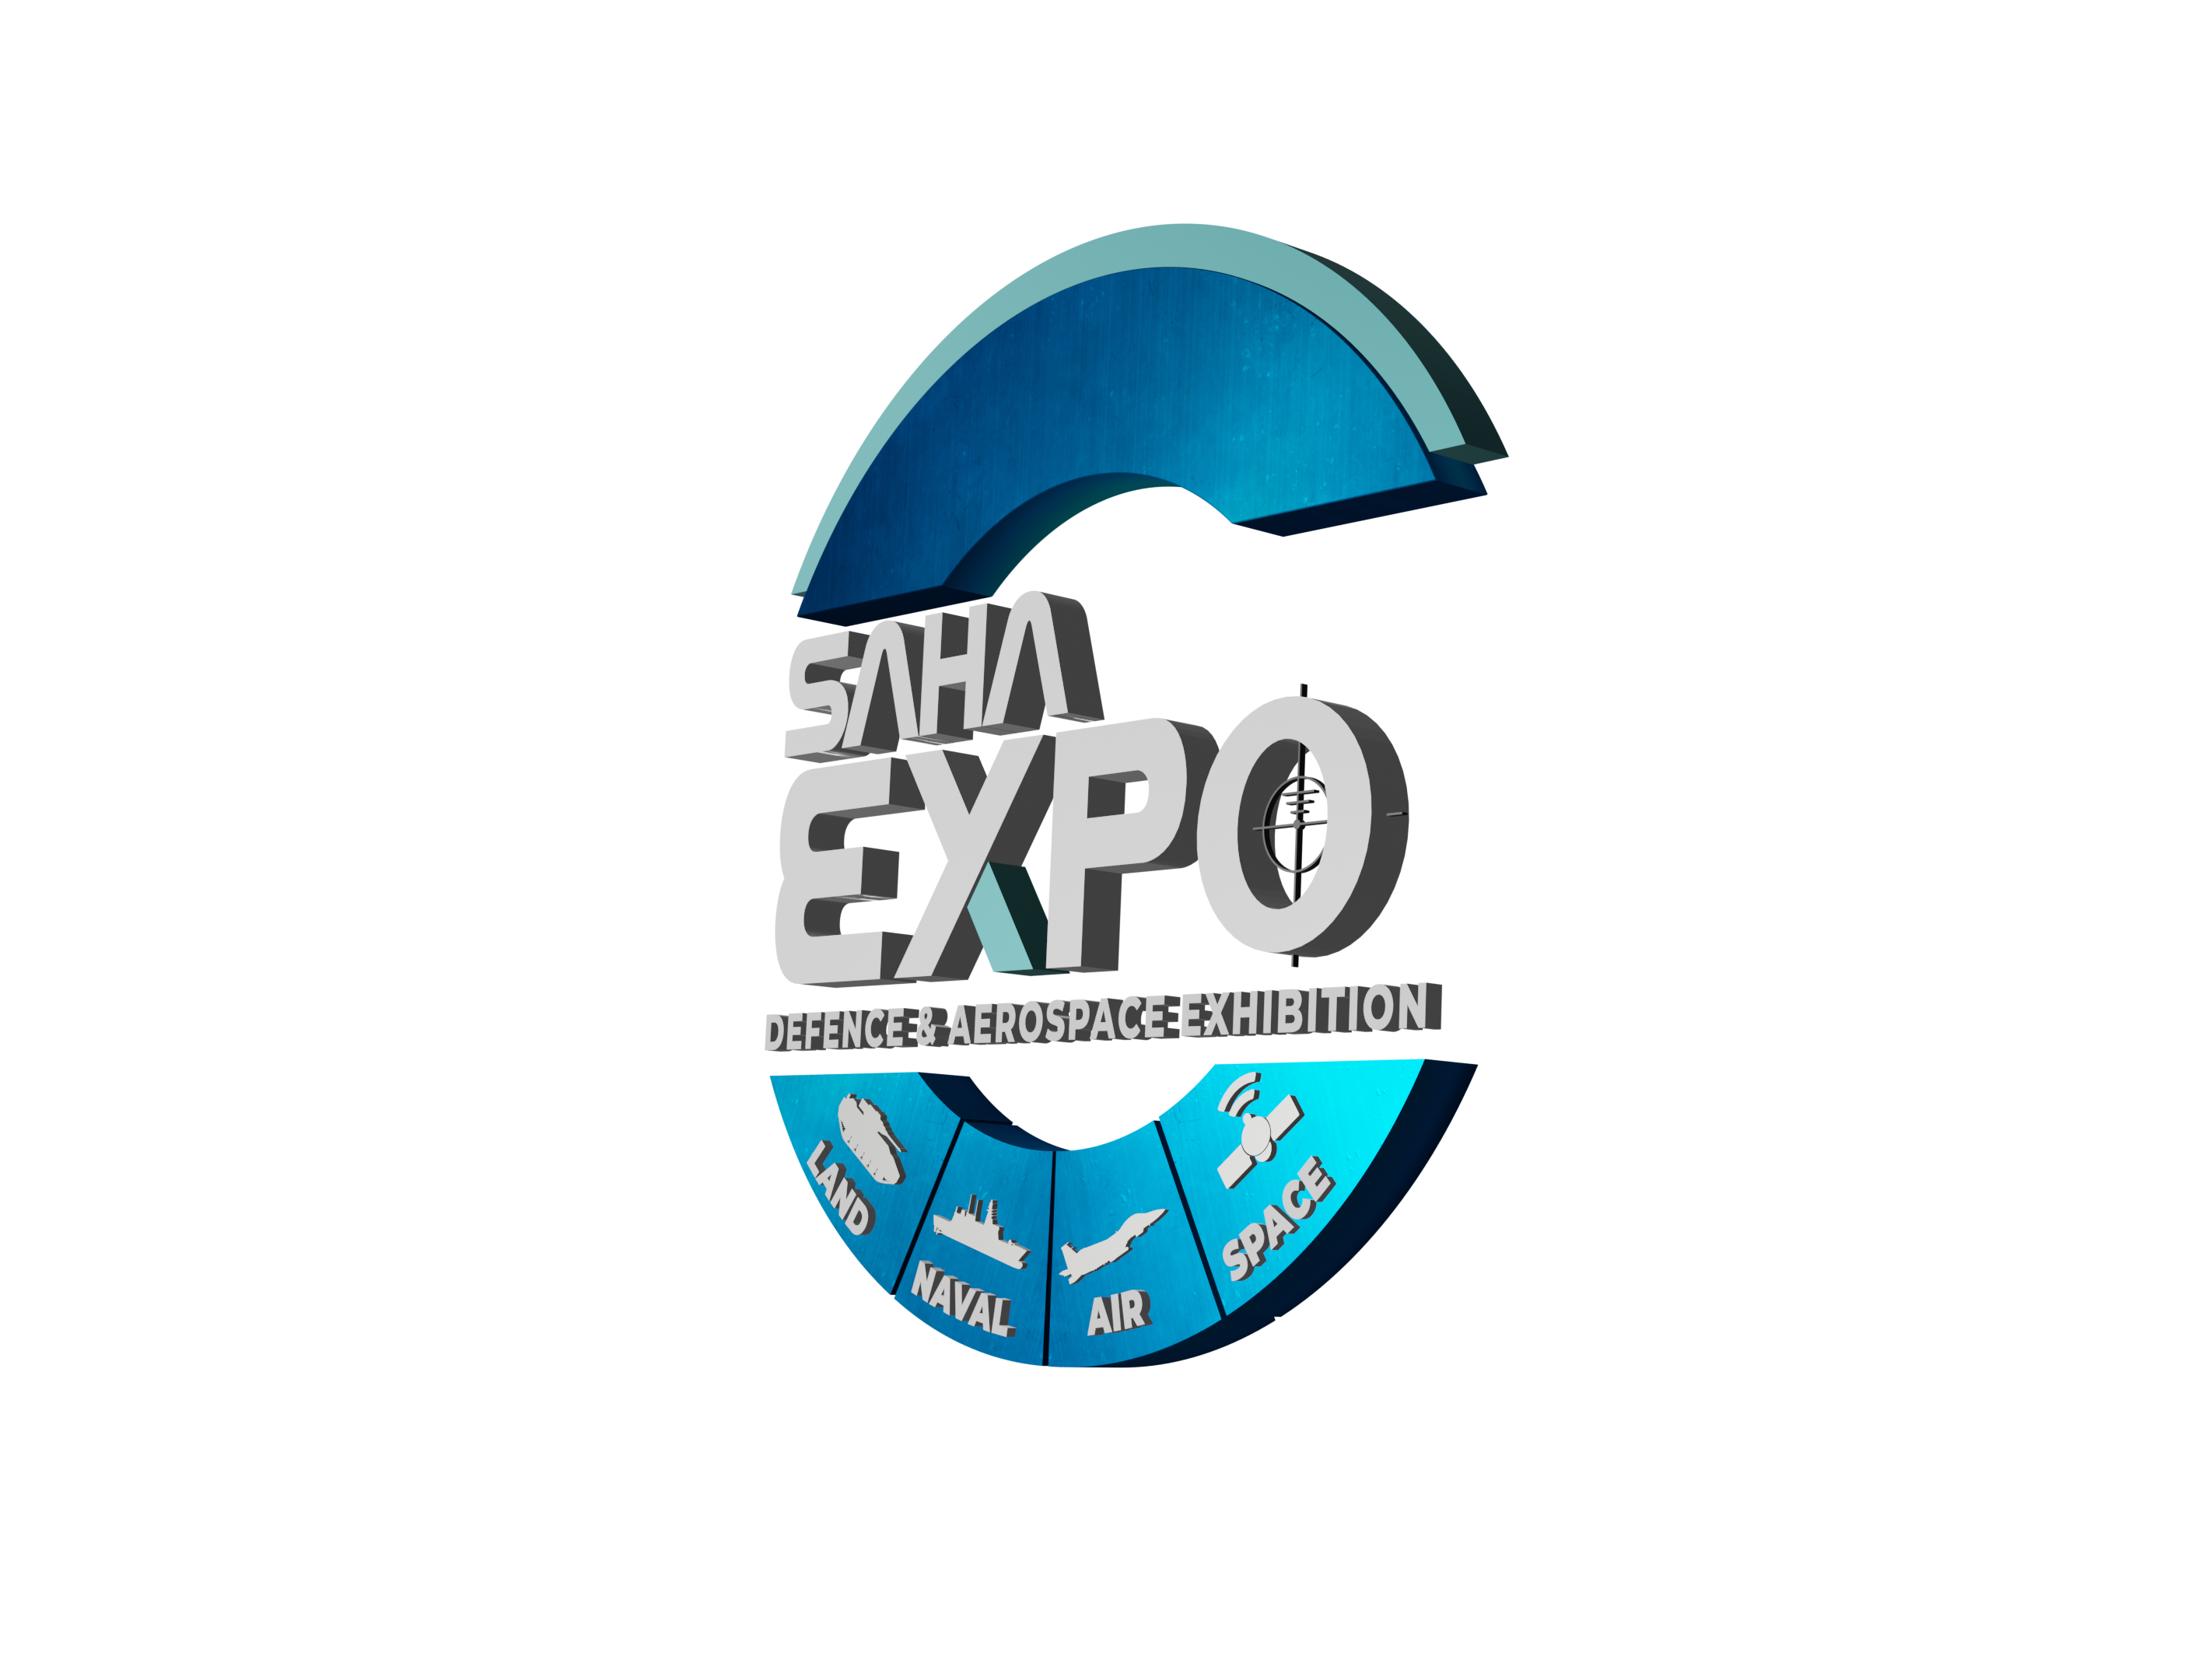 SAHA Expo Defence & Aerospace Exhibition